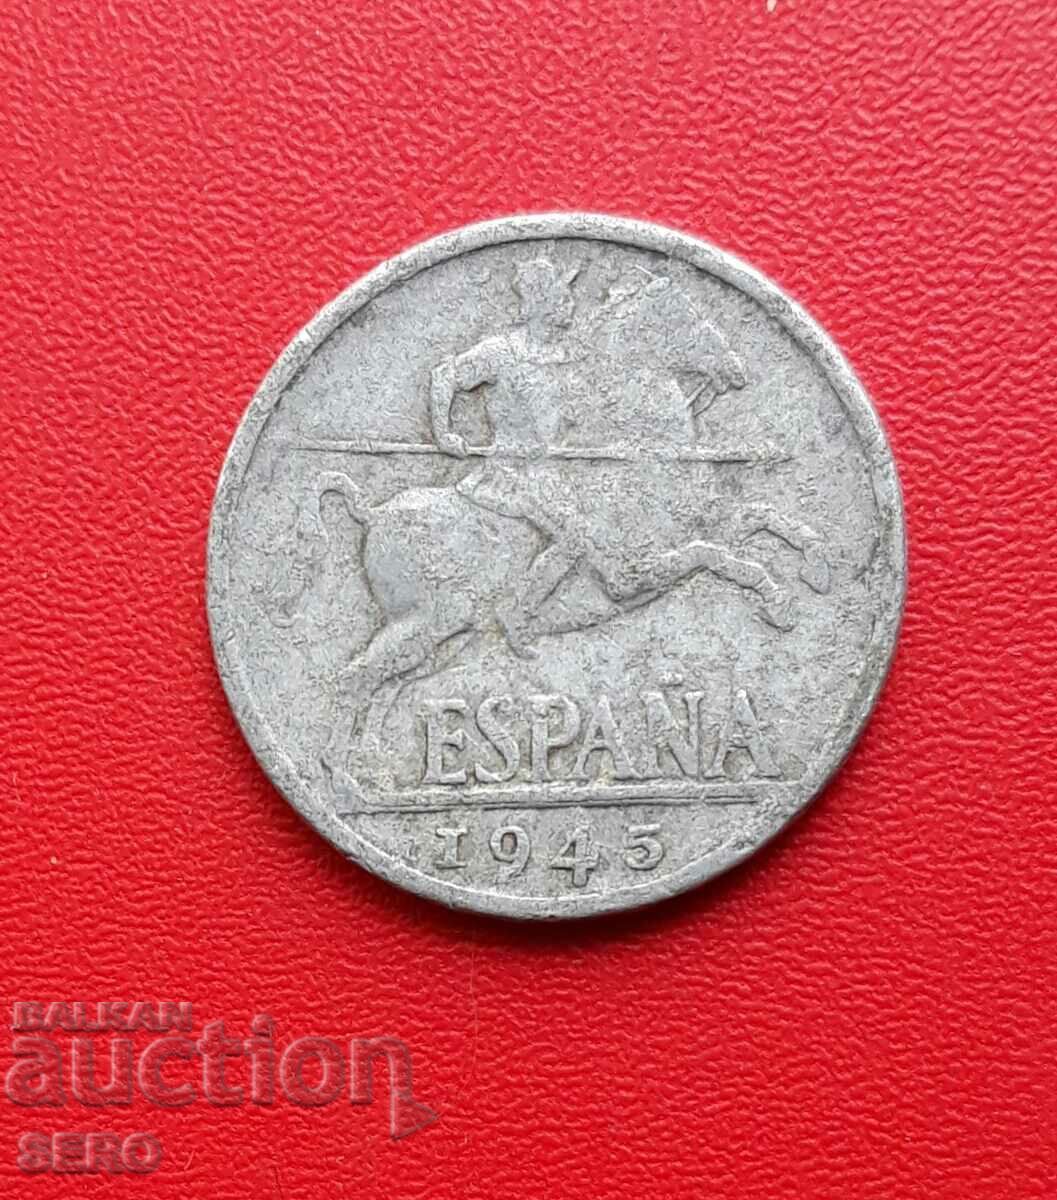 Spain-10 cents 1945